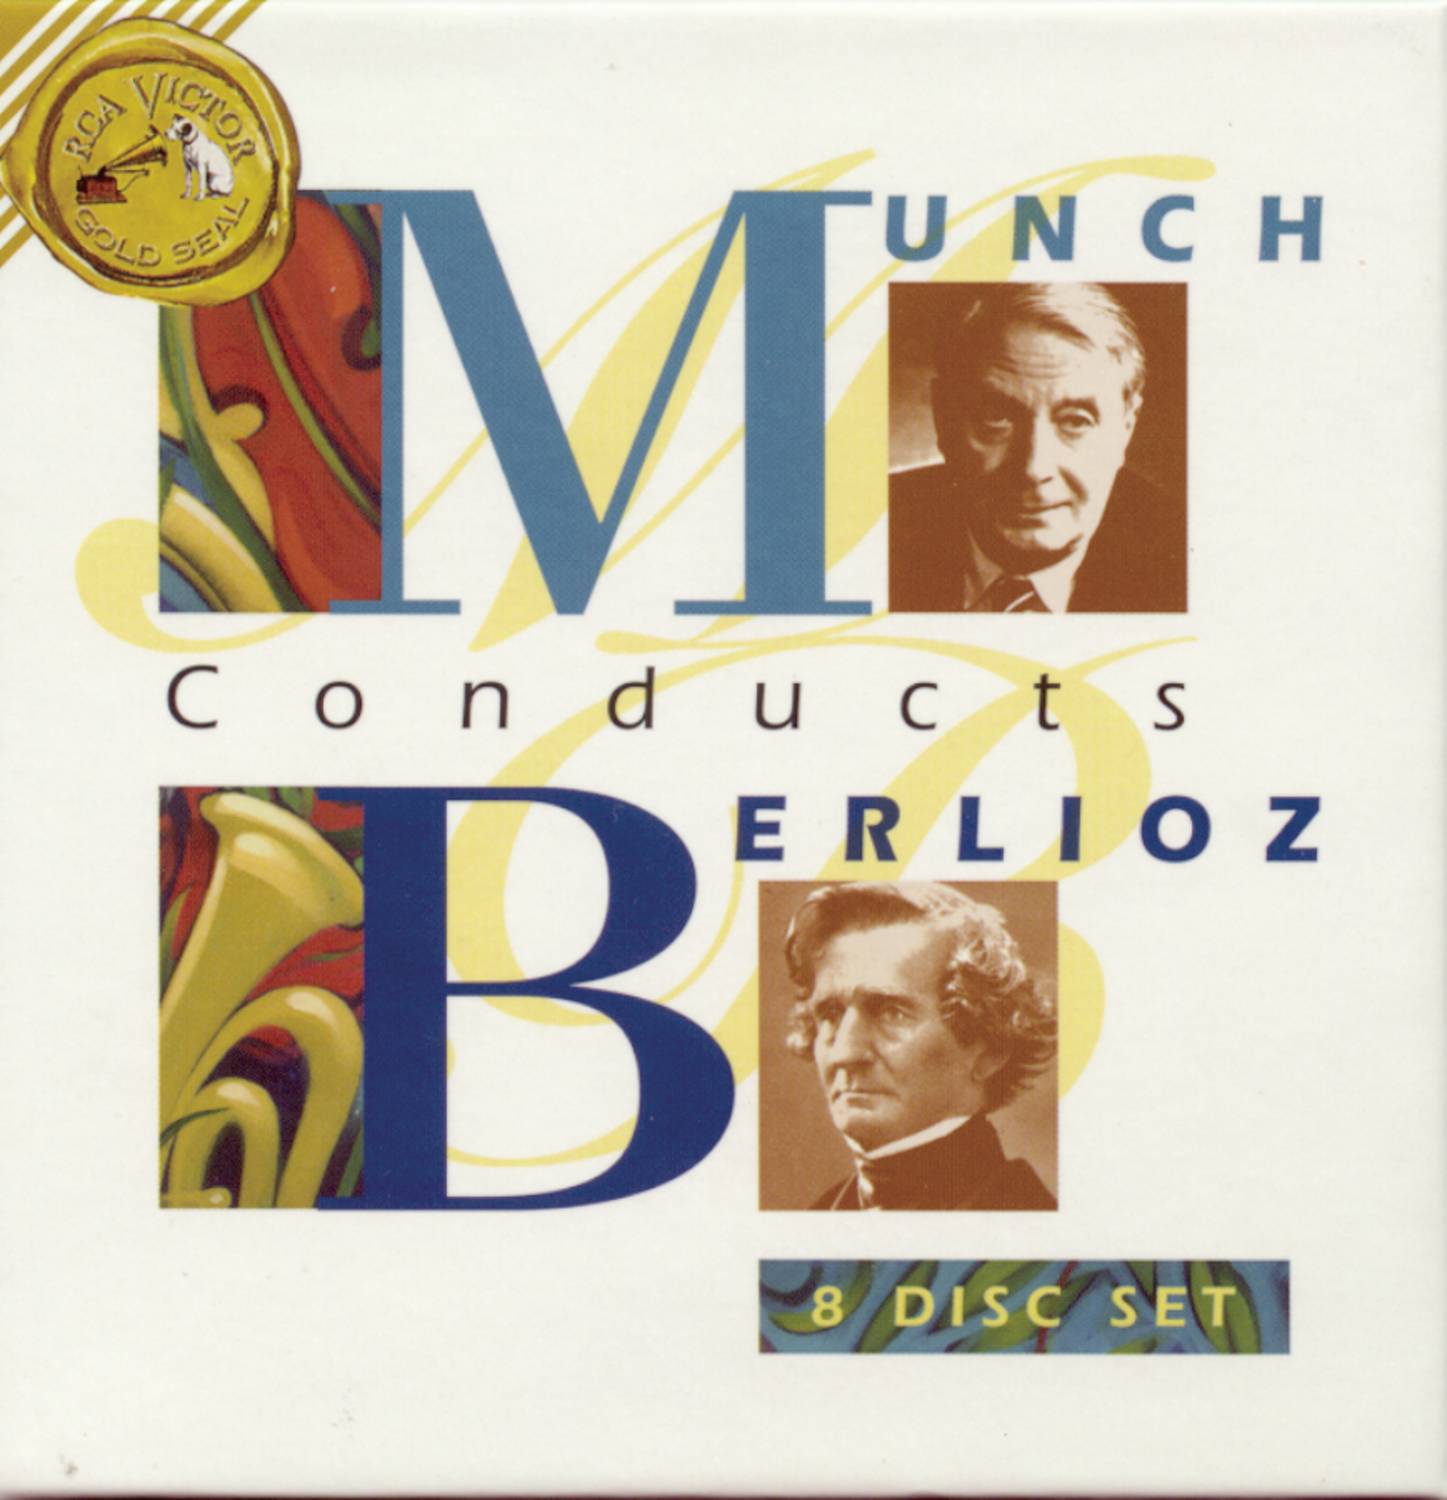 Charles Munch conducts Berlioz